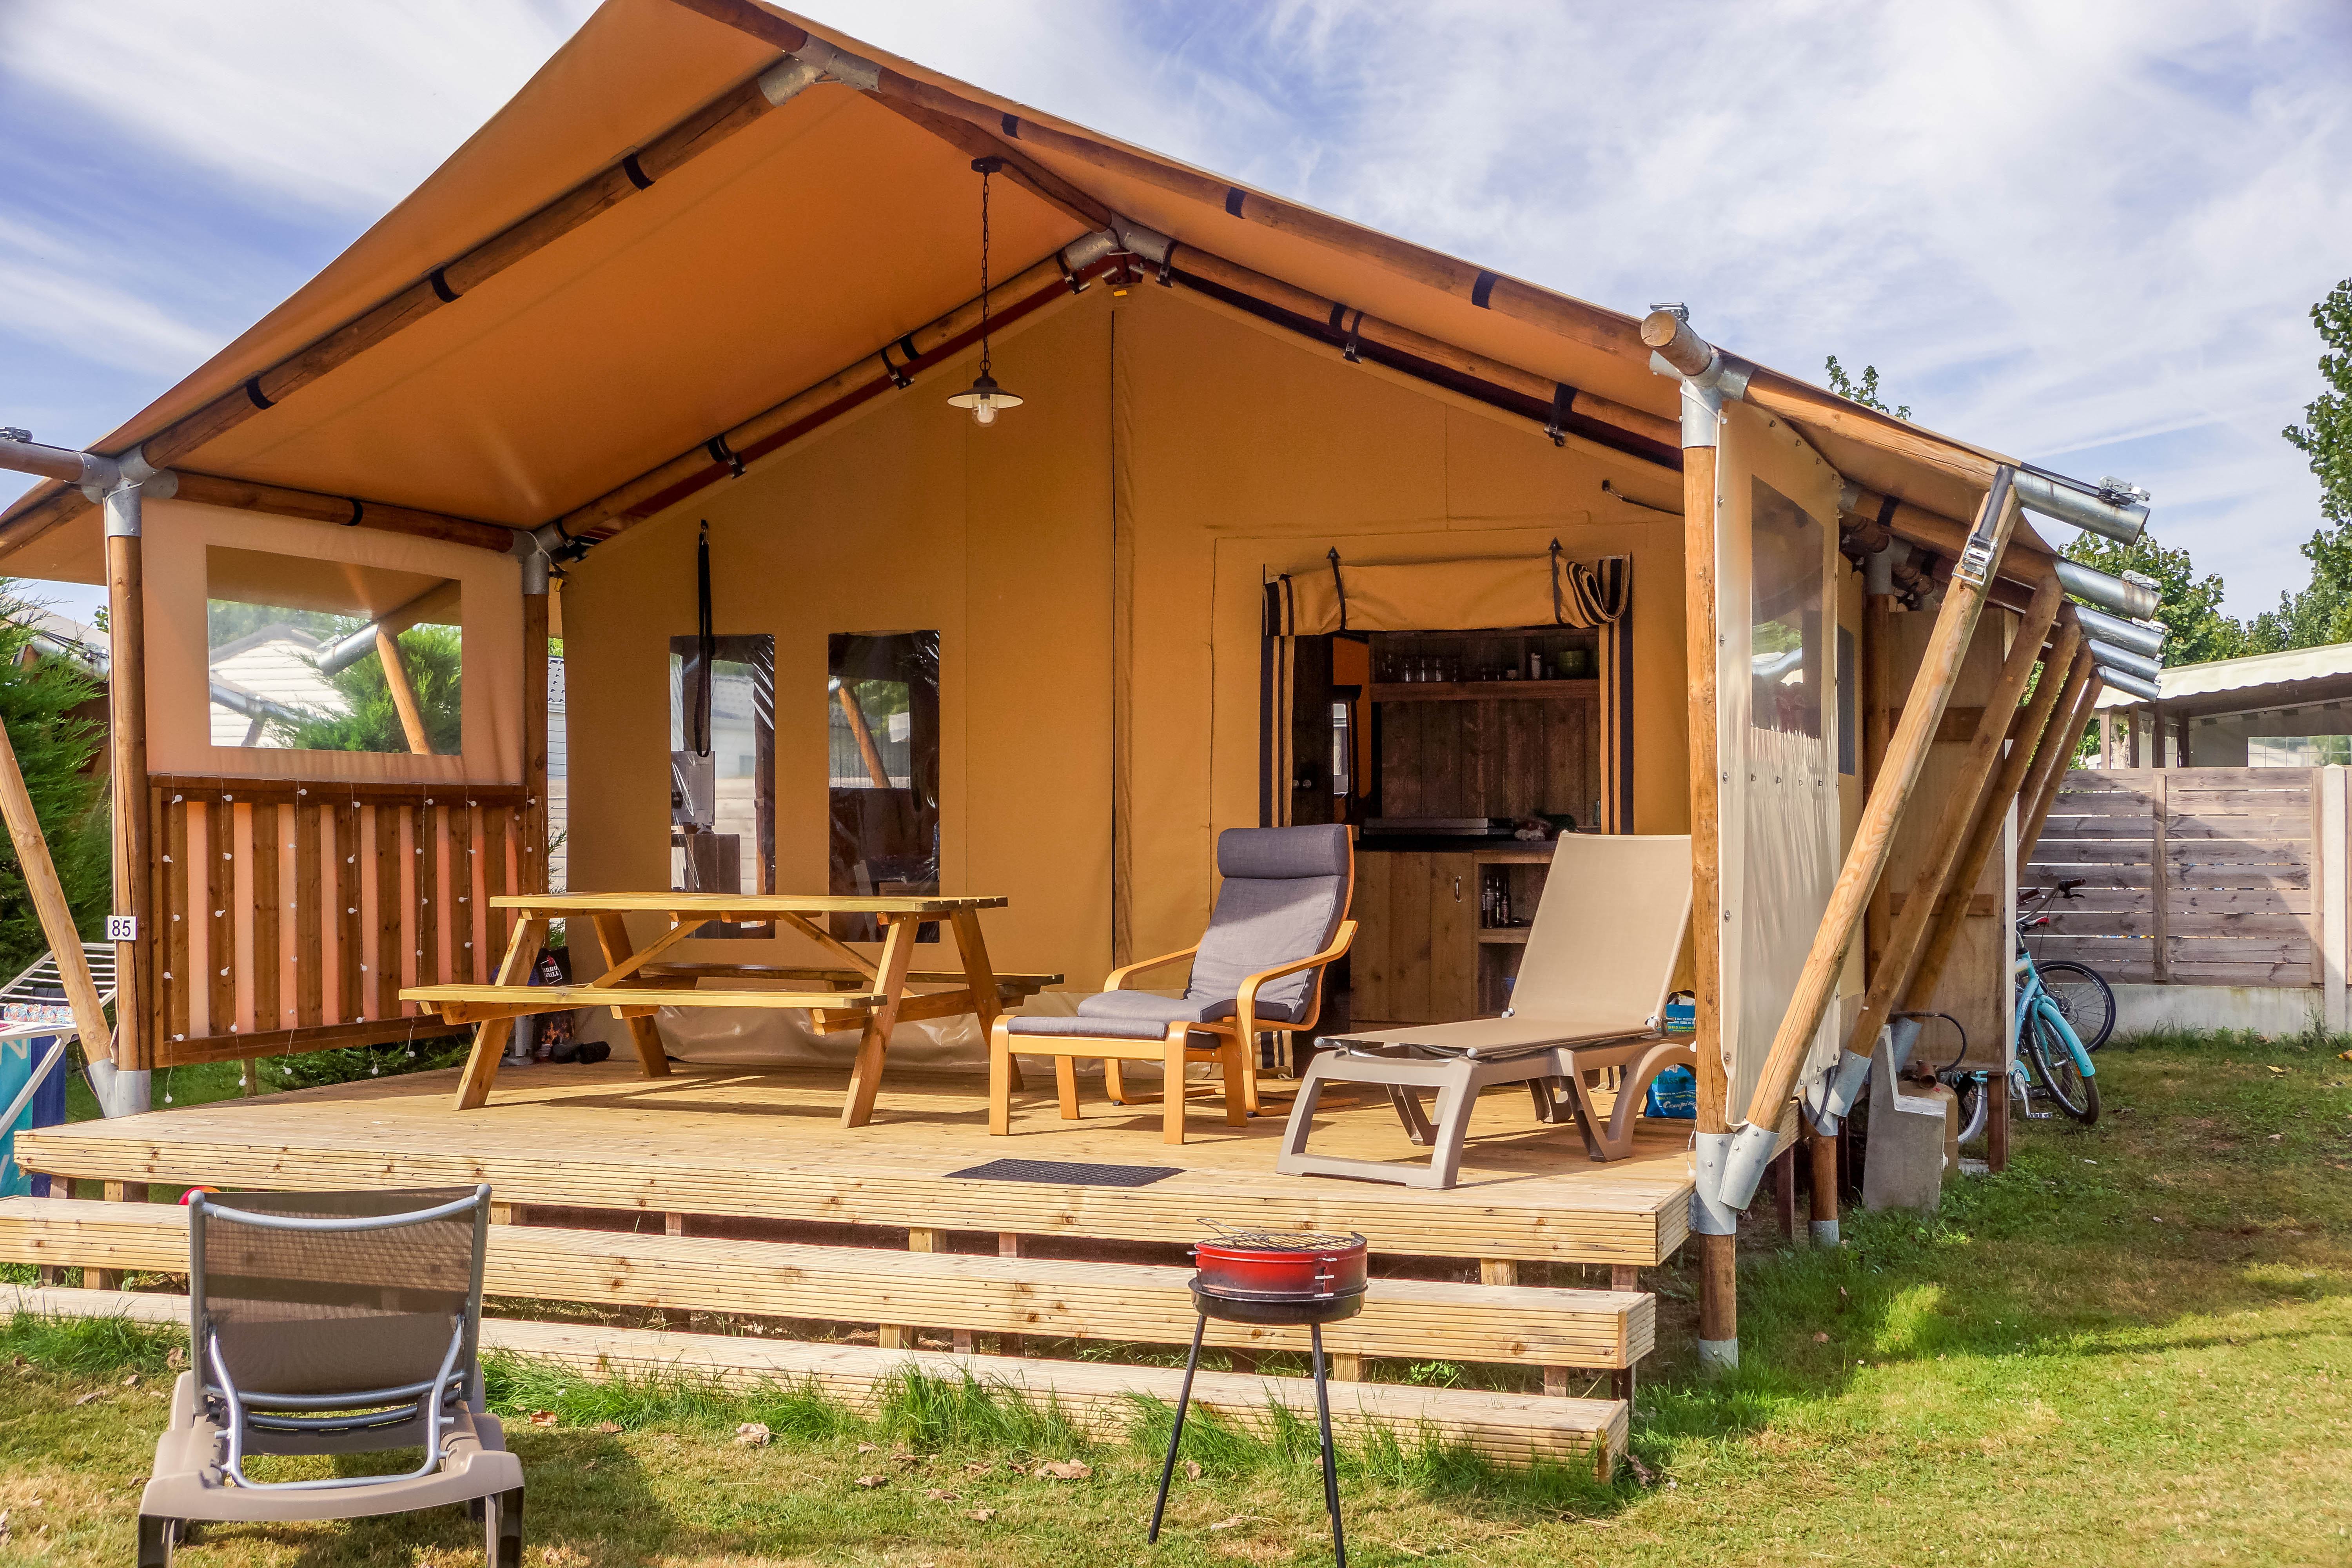 INSOLITE - Tente Lodge 38 m² / 2 chambres / sanitaires